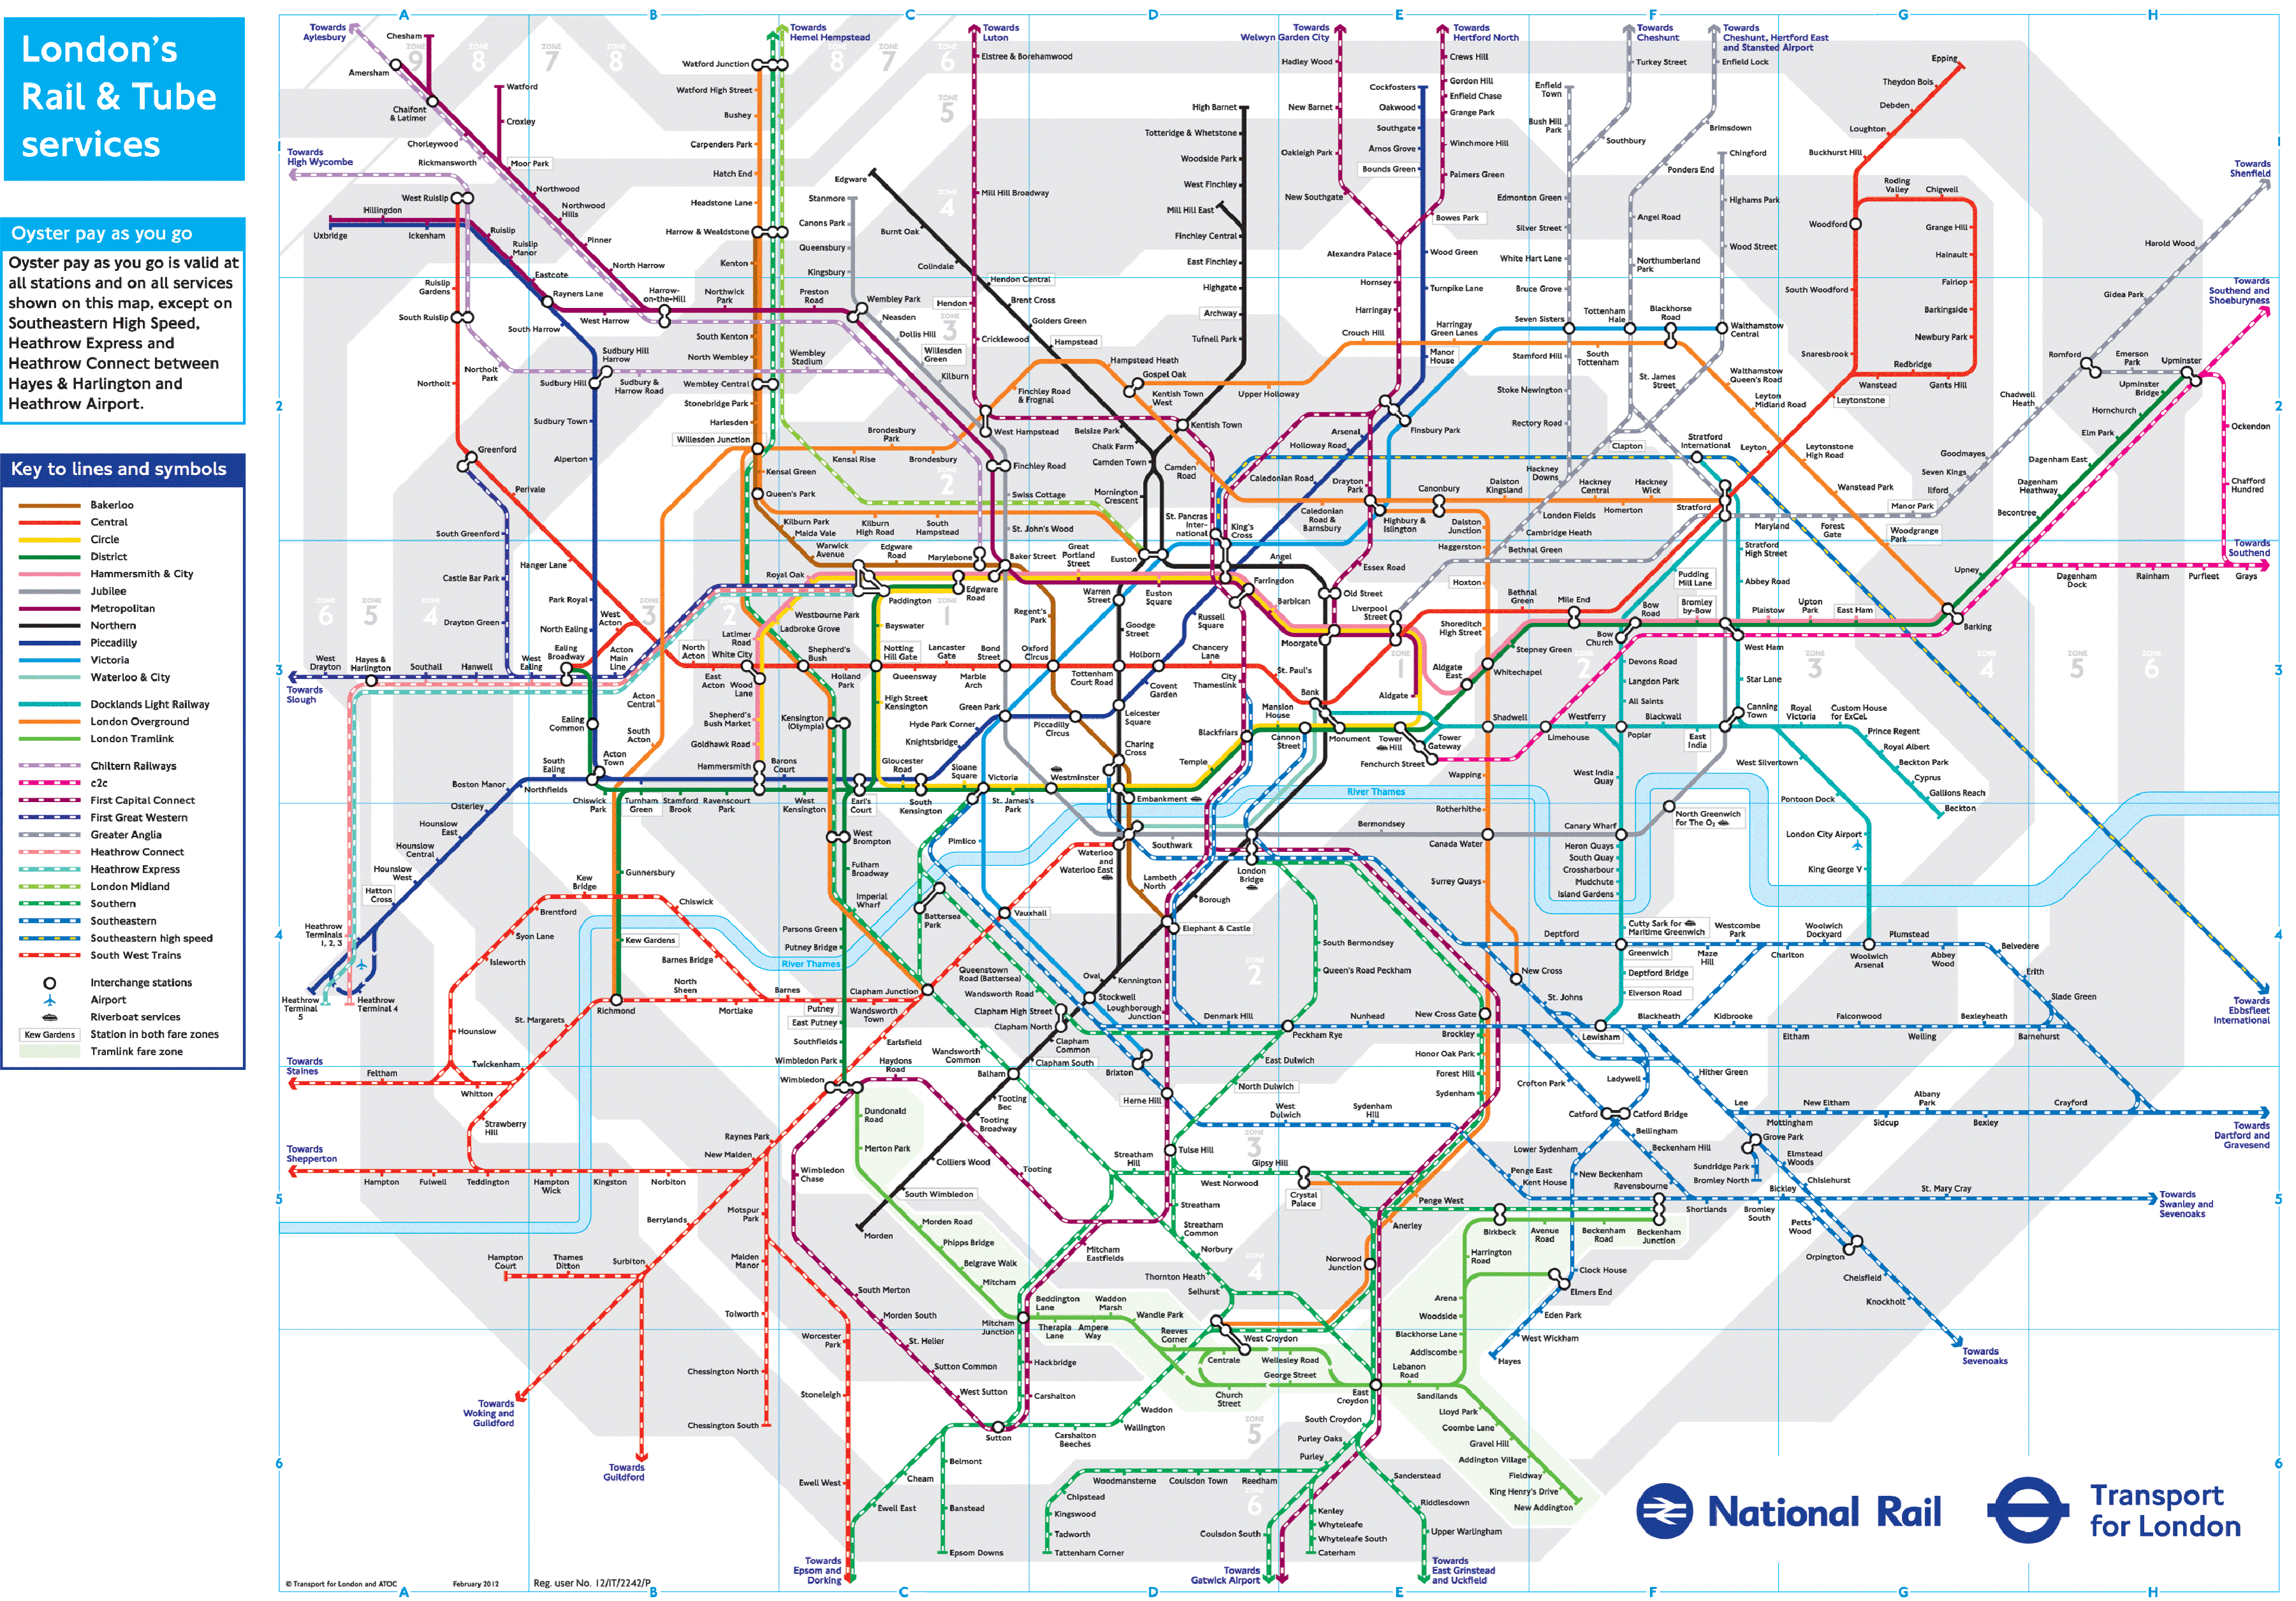 chameleon-web-services-london-underground-tube-map